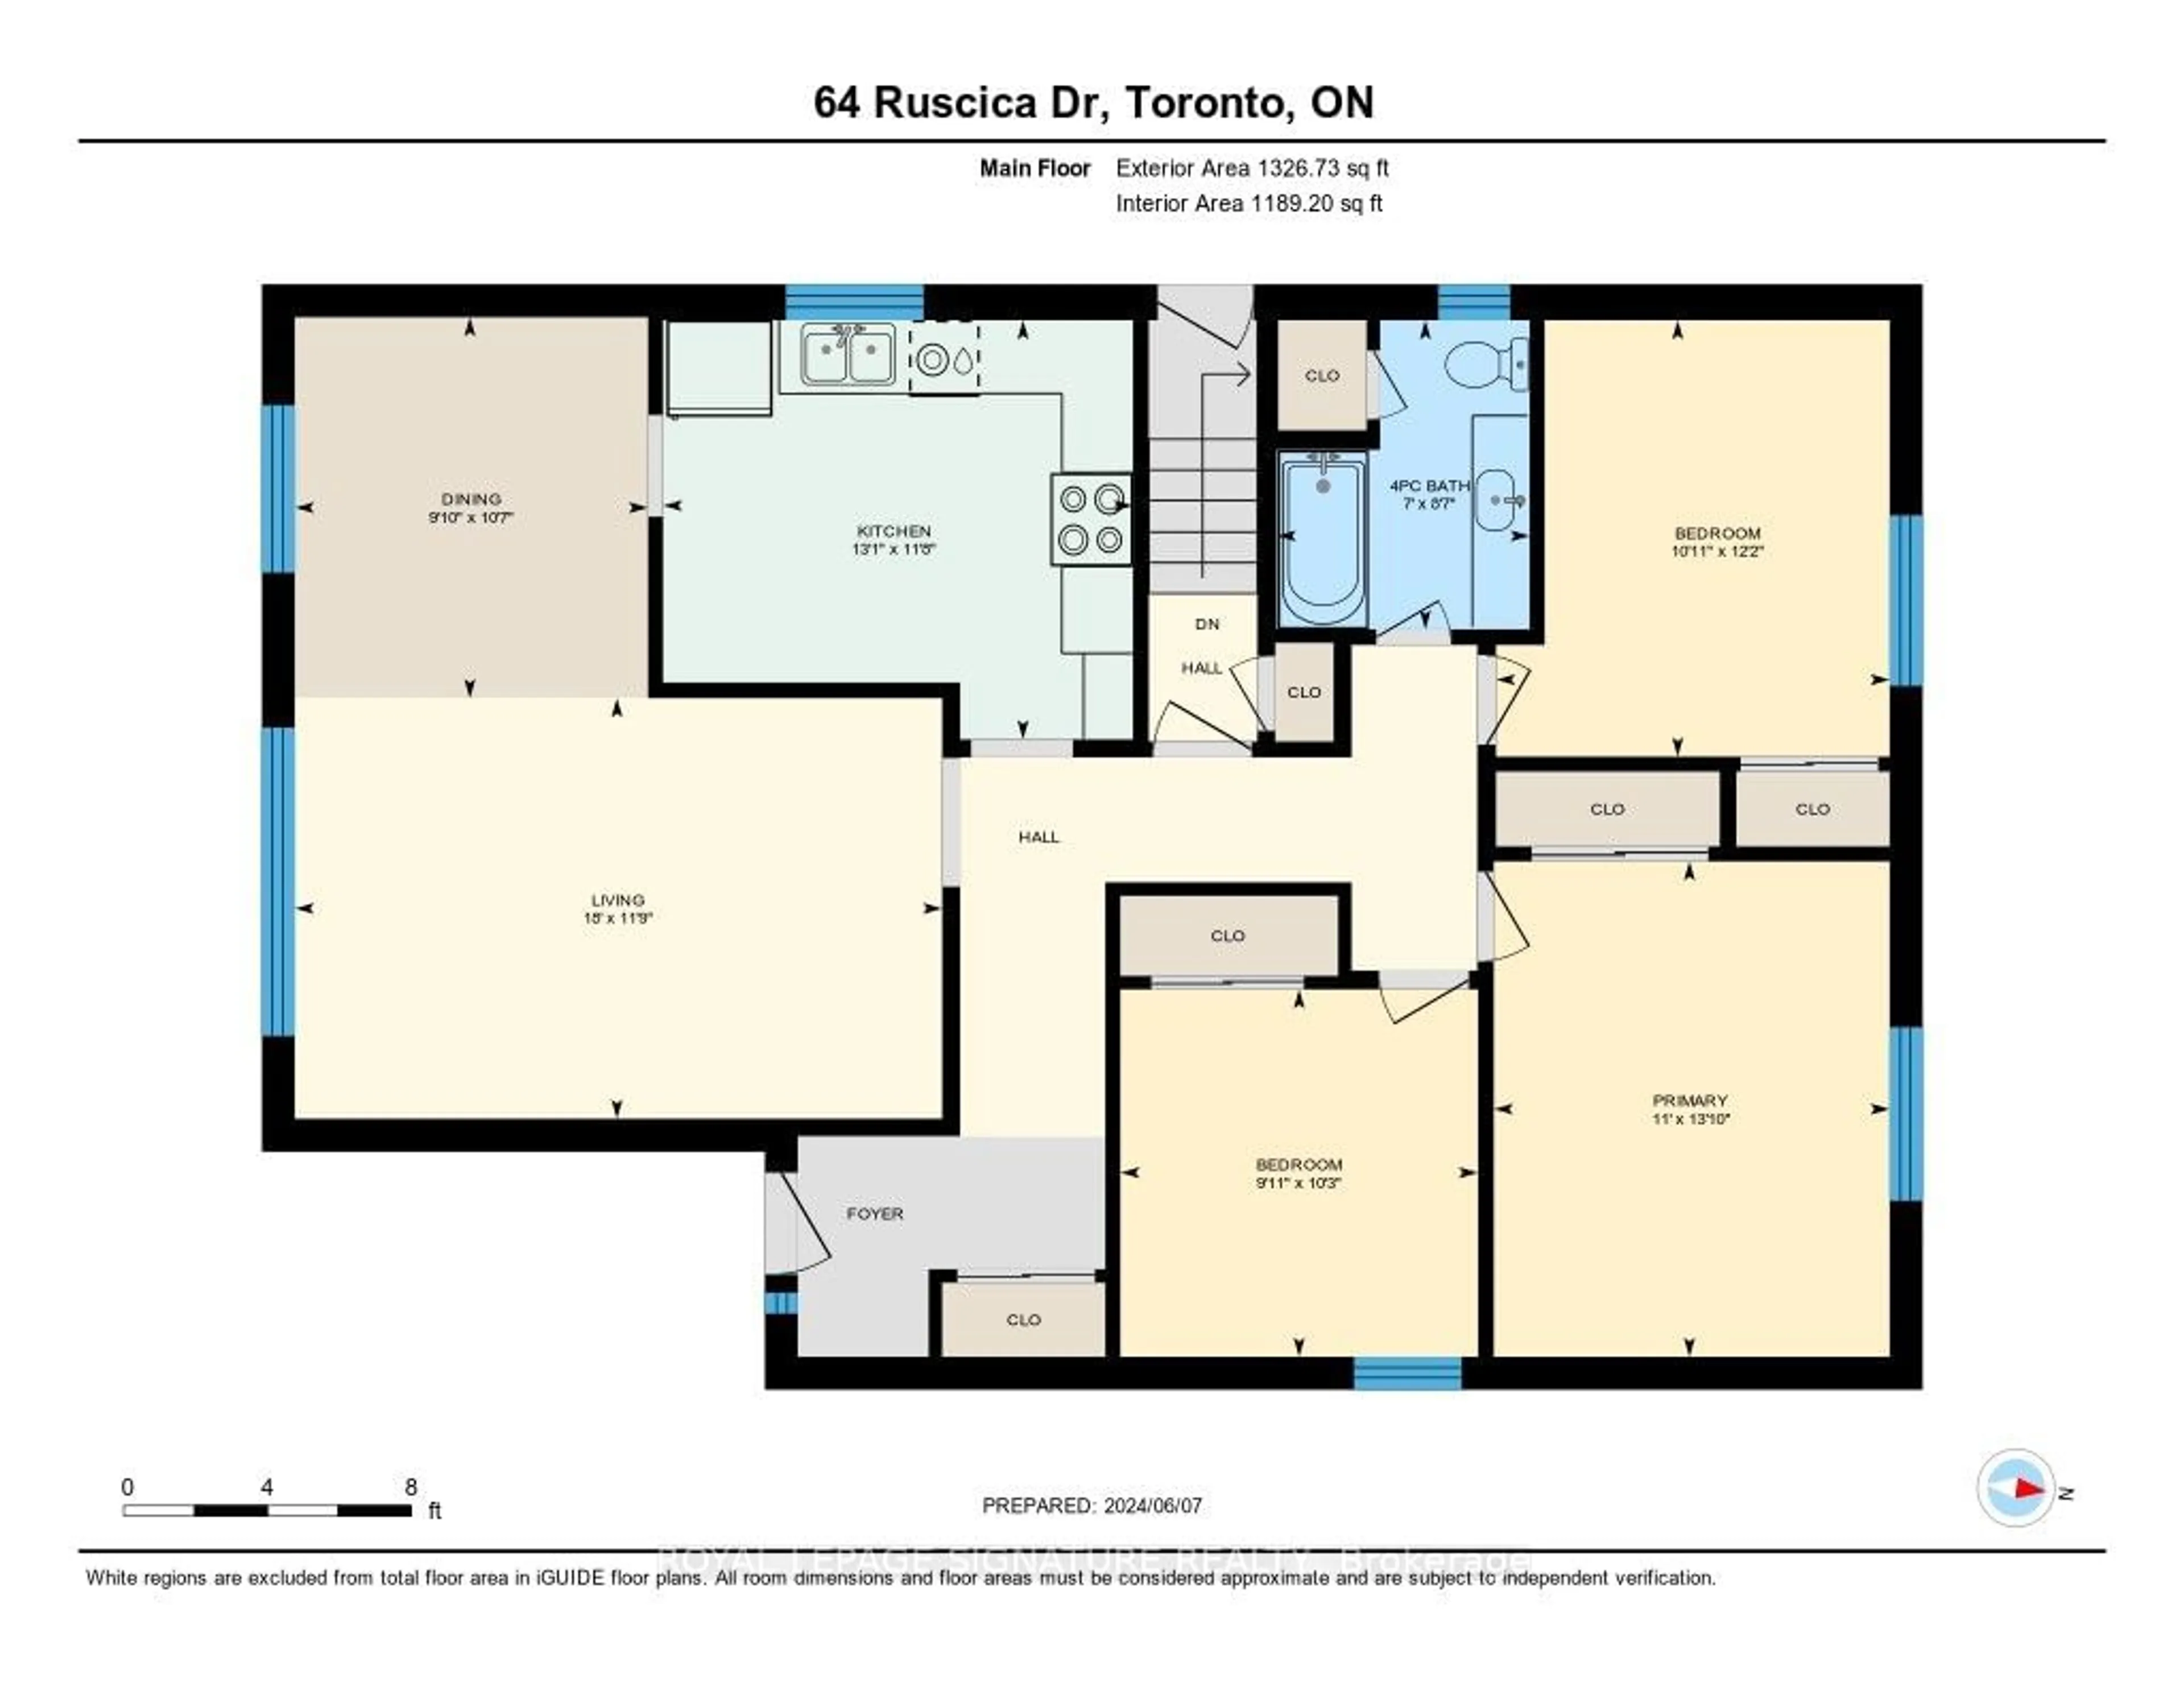 Floor plan for 64 RUSCICA Dr, Toronto Ontario M4A 1R4